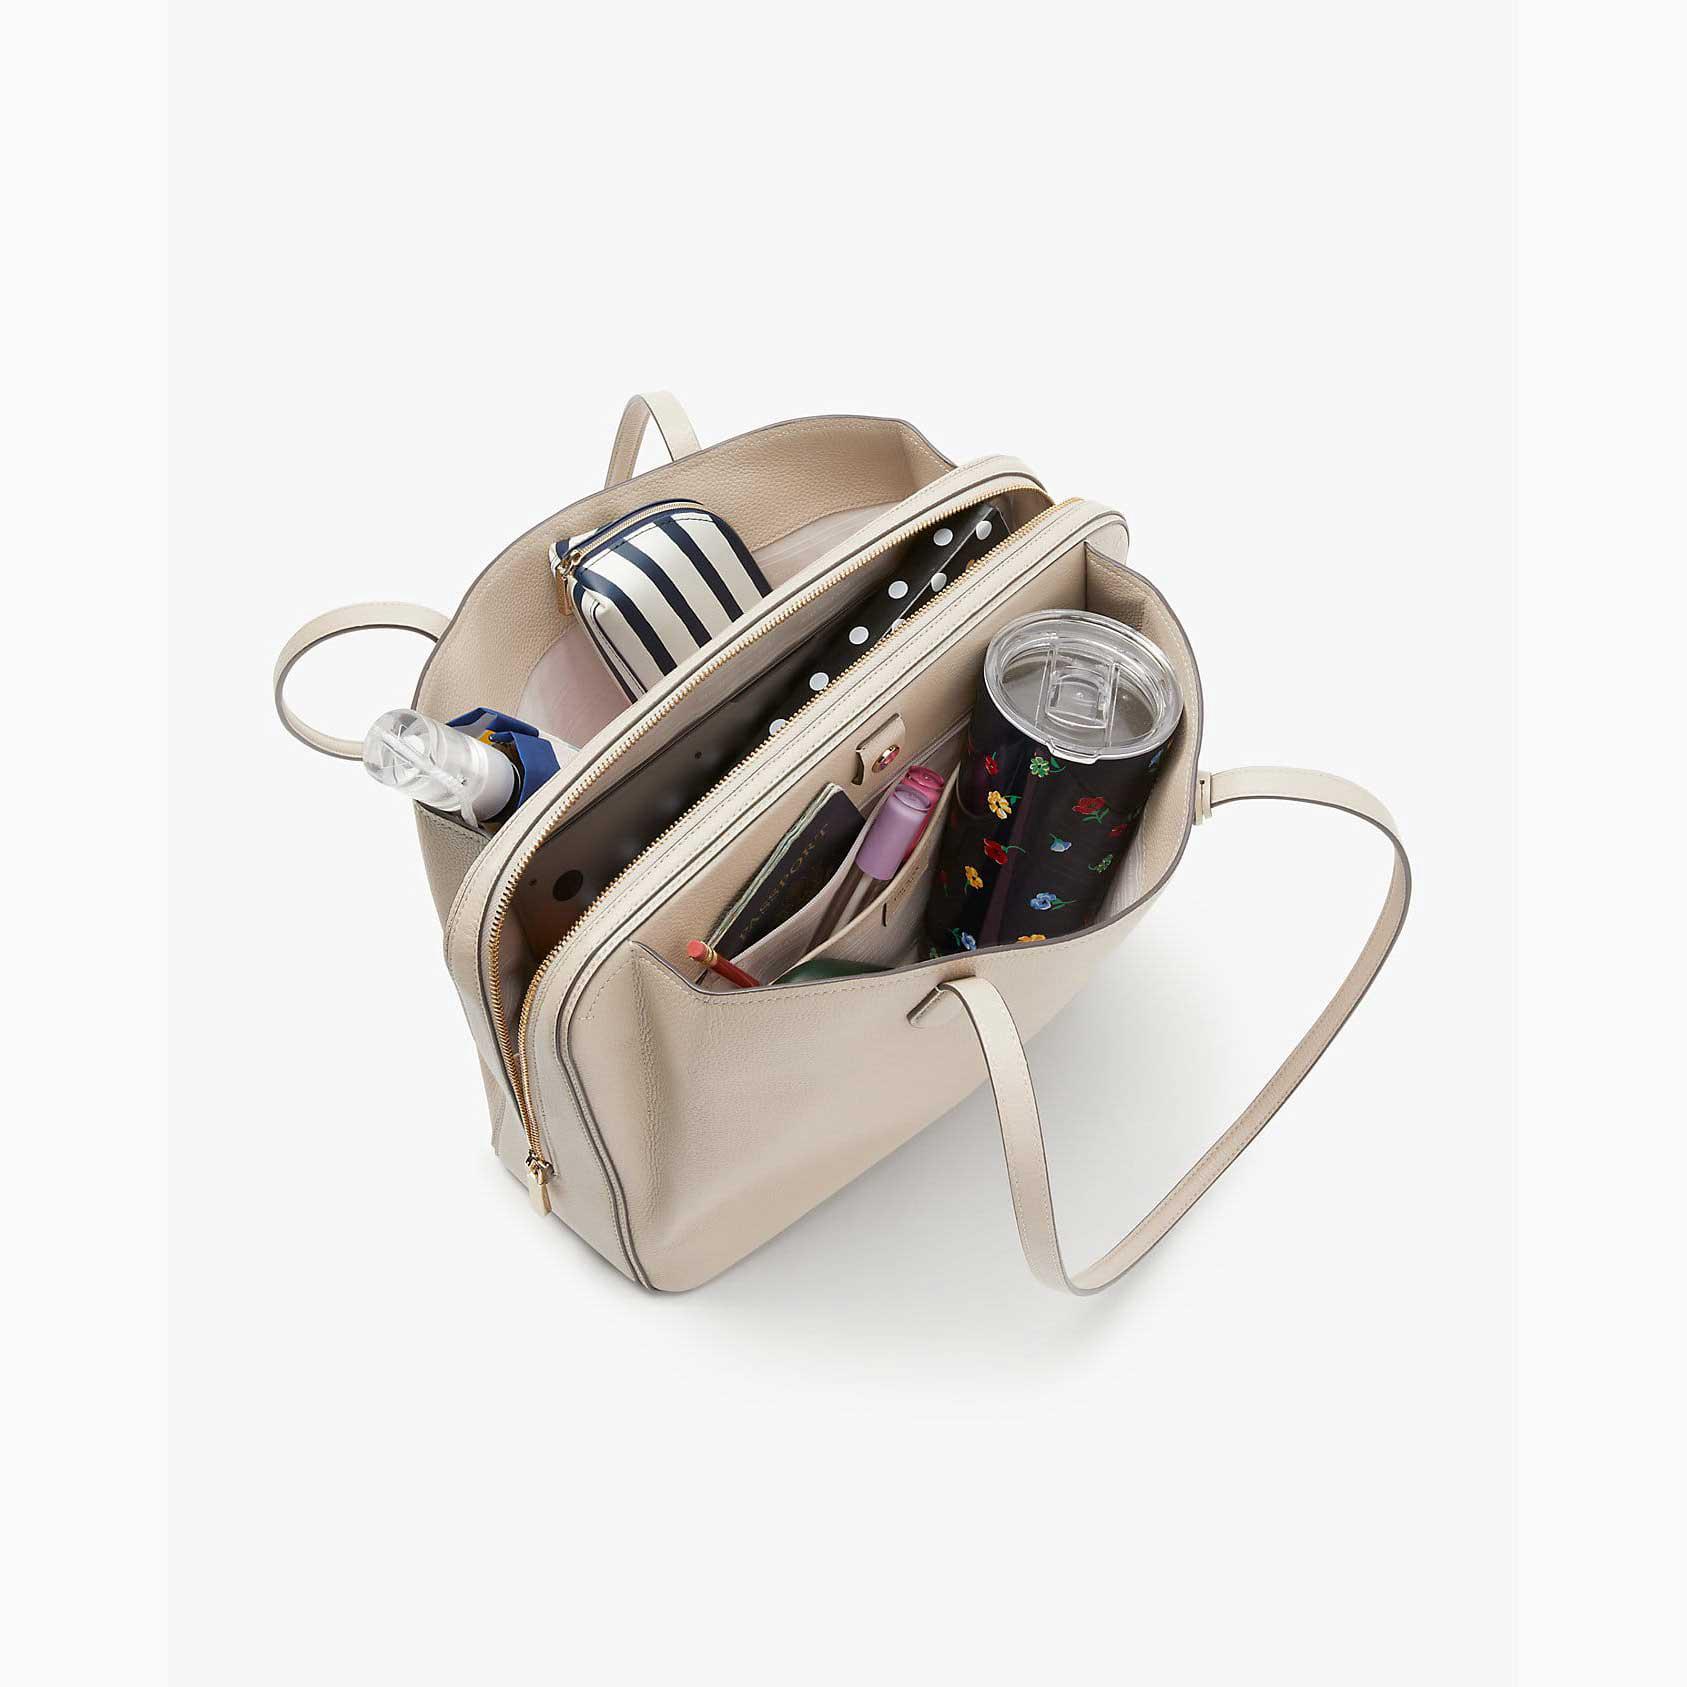 Kate Spade Laptop bag, Women's Bags